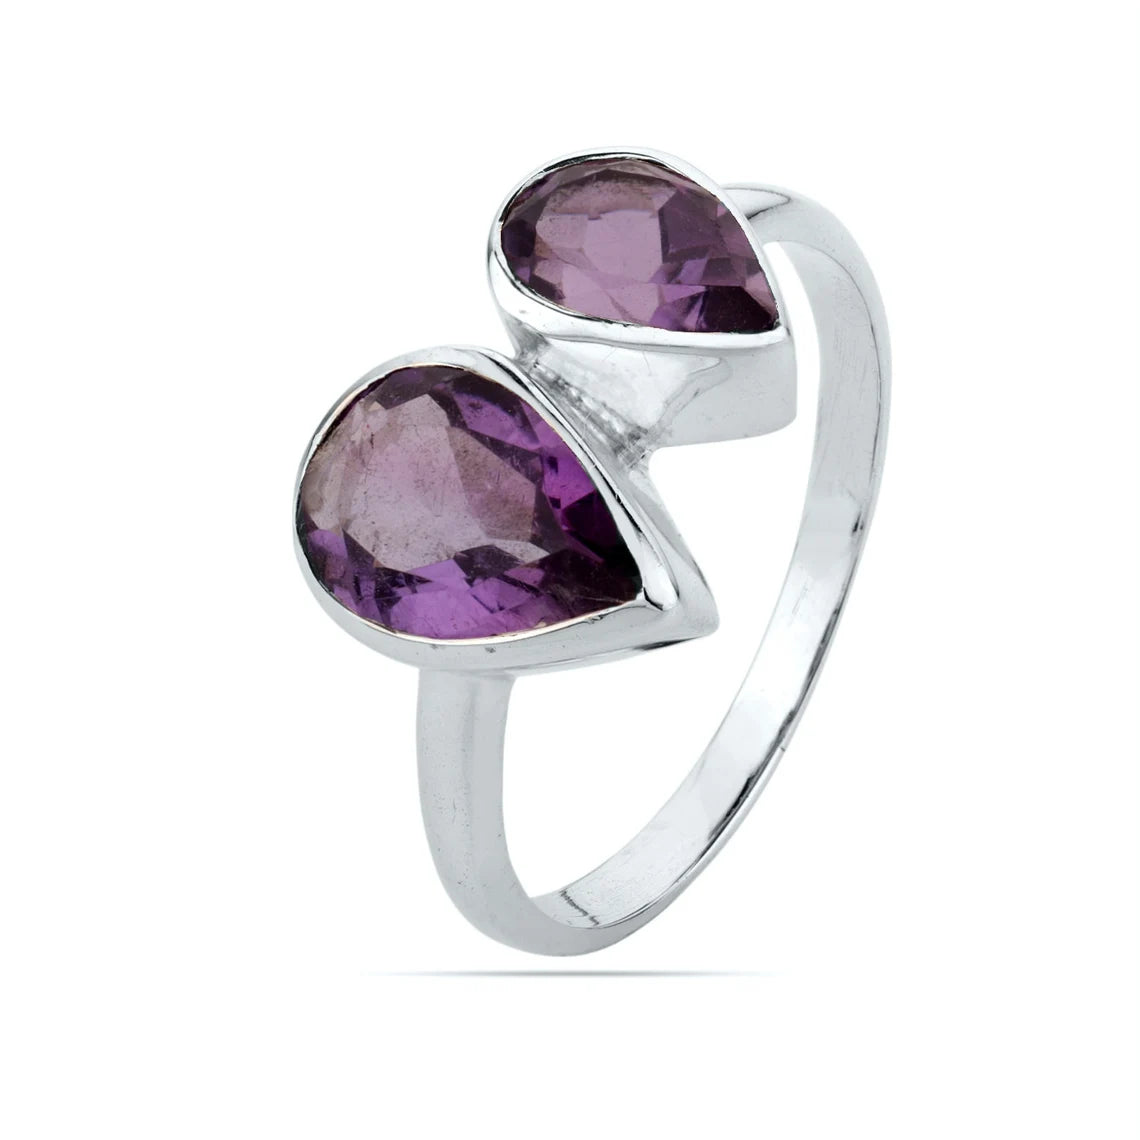 Amethyst Silver Ring, Boho Ring, Statement Ring, Purple Stone Ring